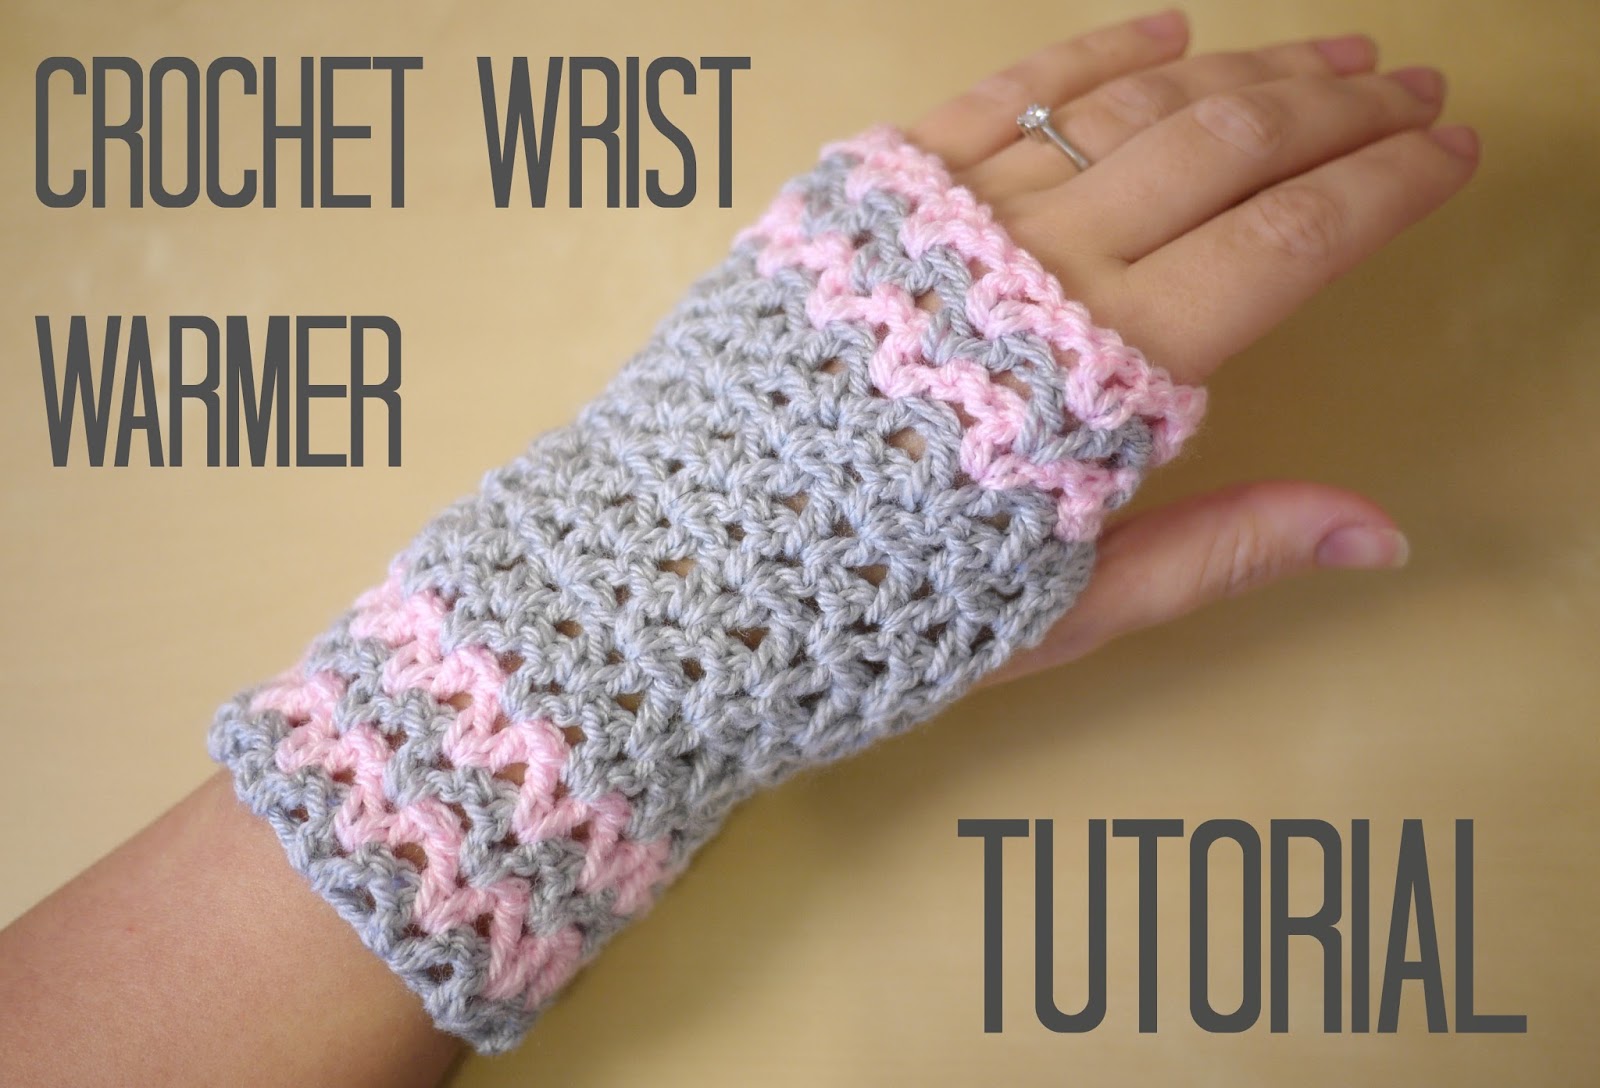 Crochet wrist warmers tutorial - Sarah-Jayne Fragola | Motherhood and